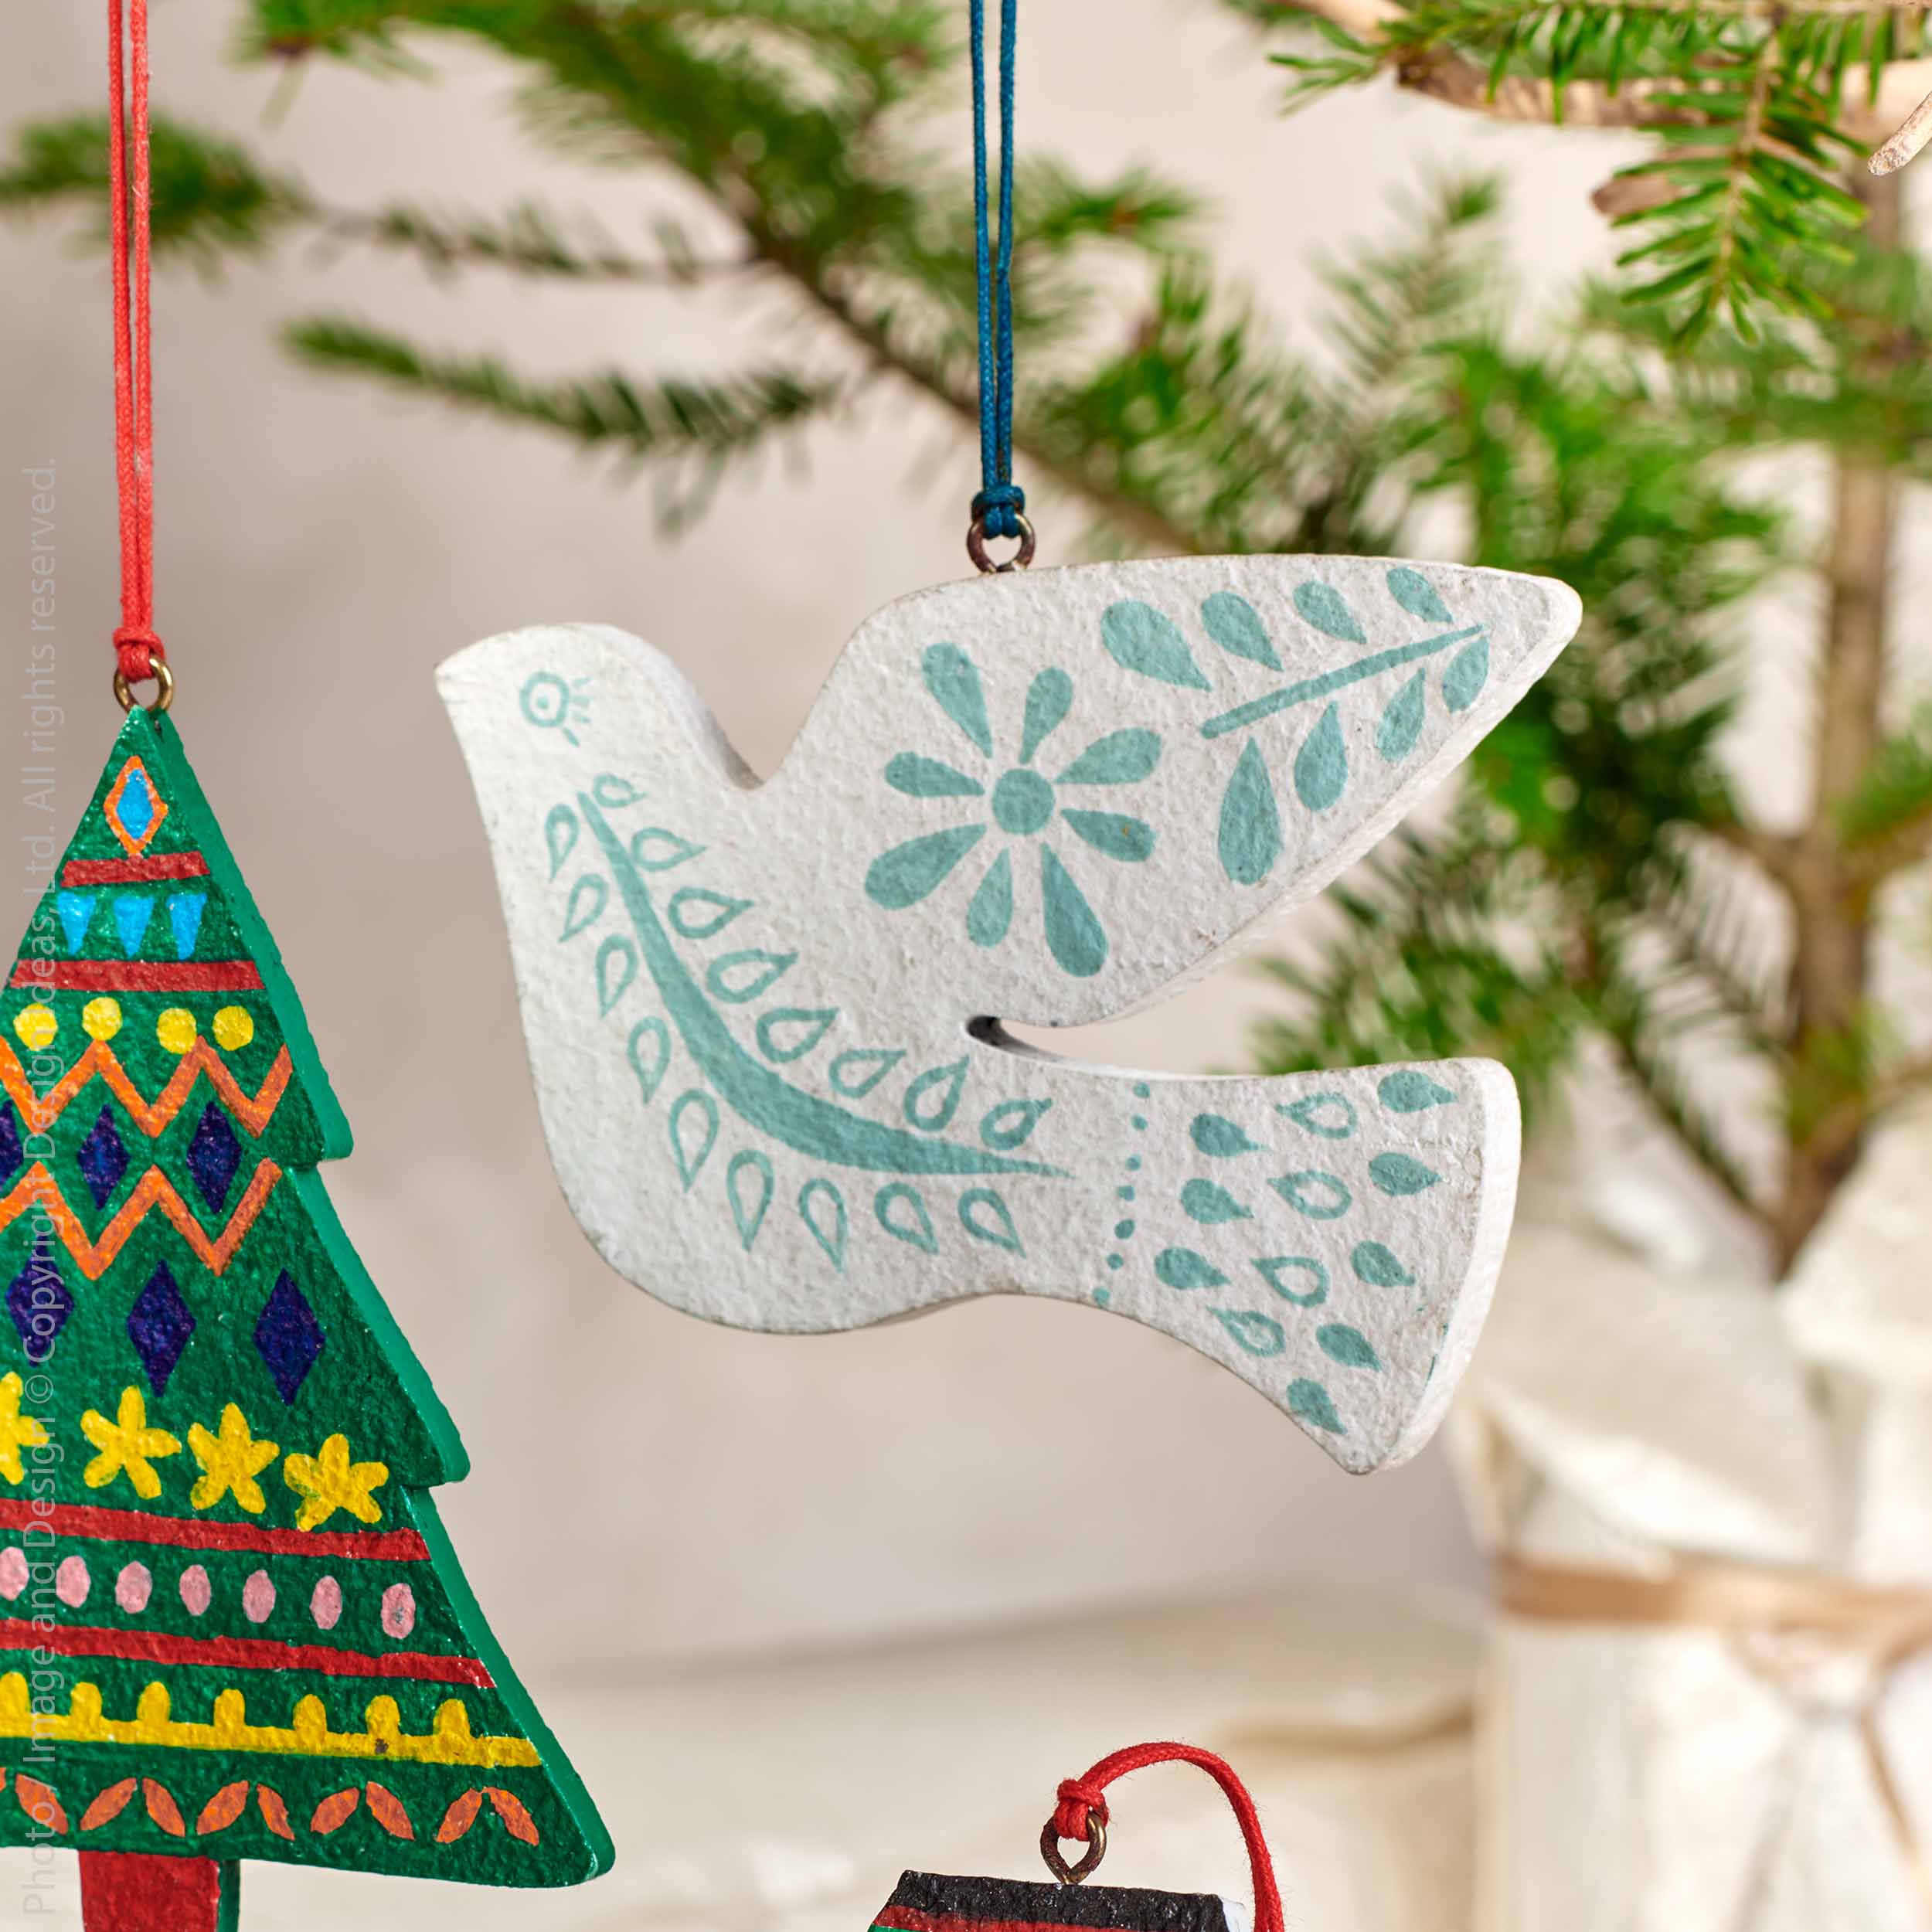 Christmas} DIY Ornaments - Hi Sugarplum!